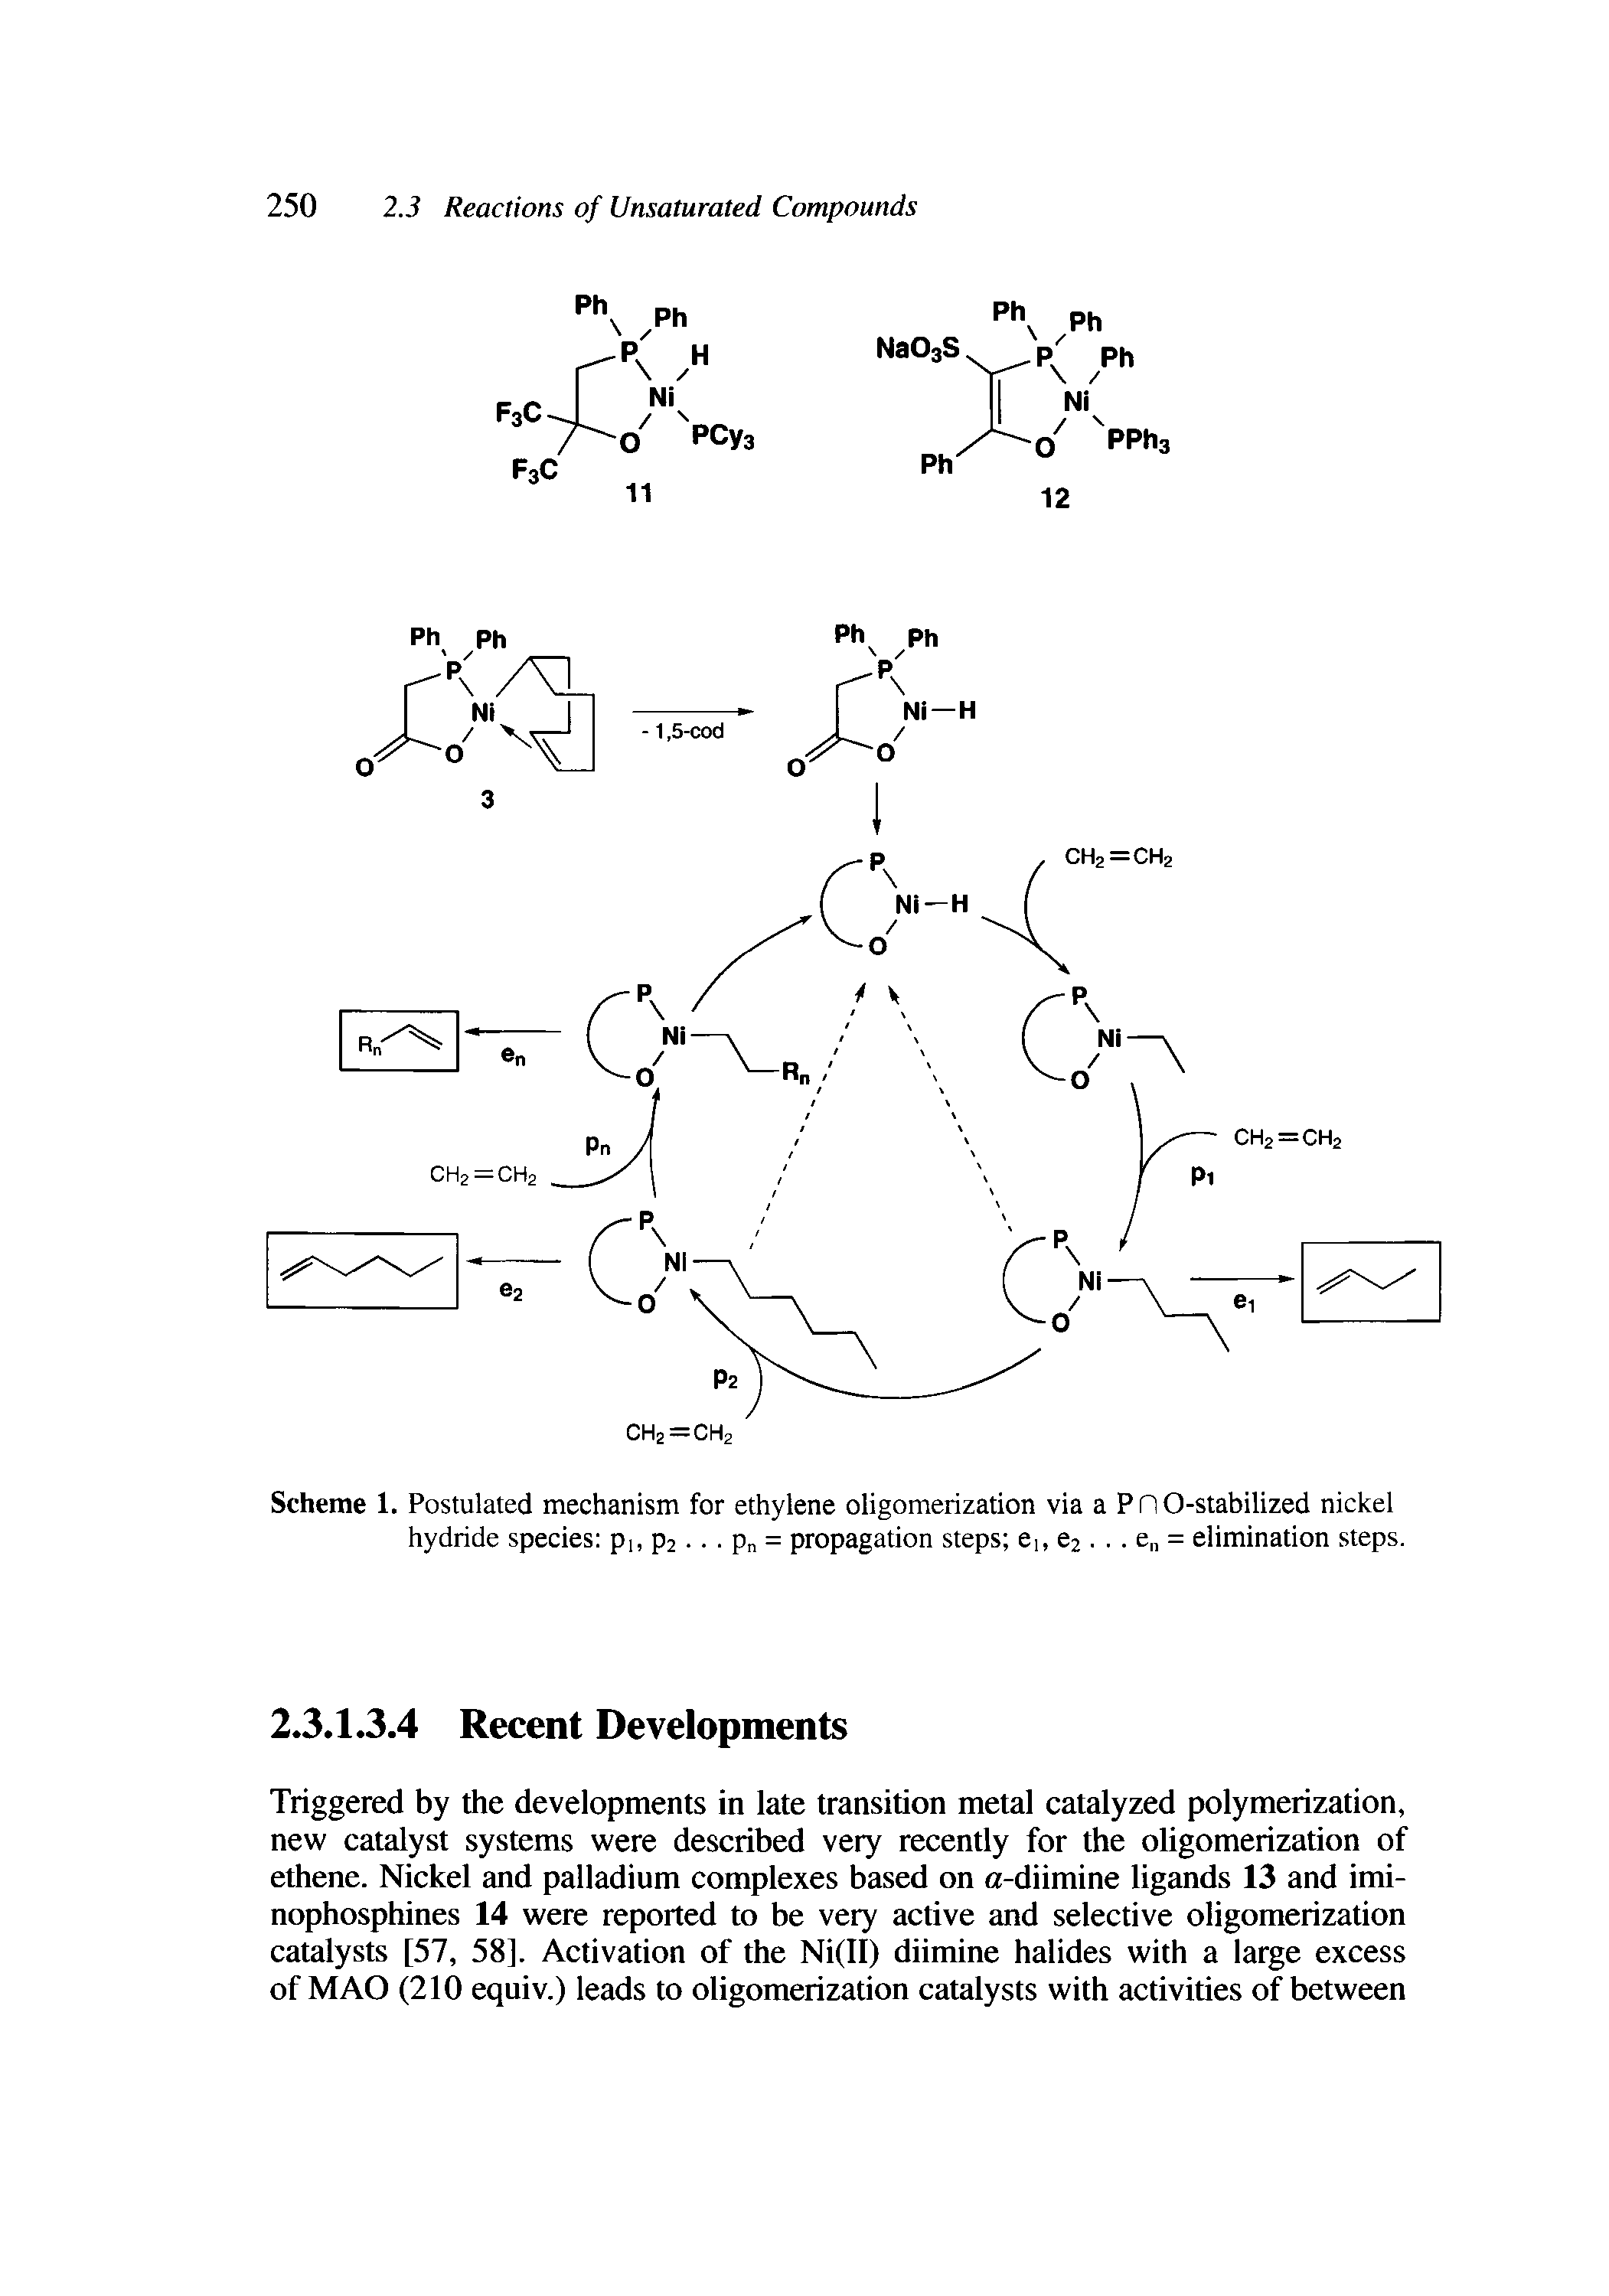 Scheme 1. Postulated mechanism for ethylene oligomerization via a P n 0-stabilized nickel hydride species pi, p2... Pn = propagation steps Ci, C2.. . e = elimination steps.